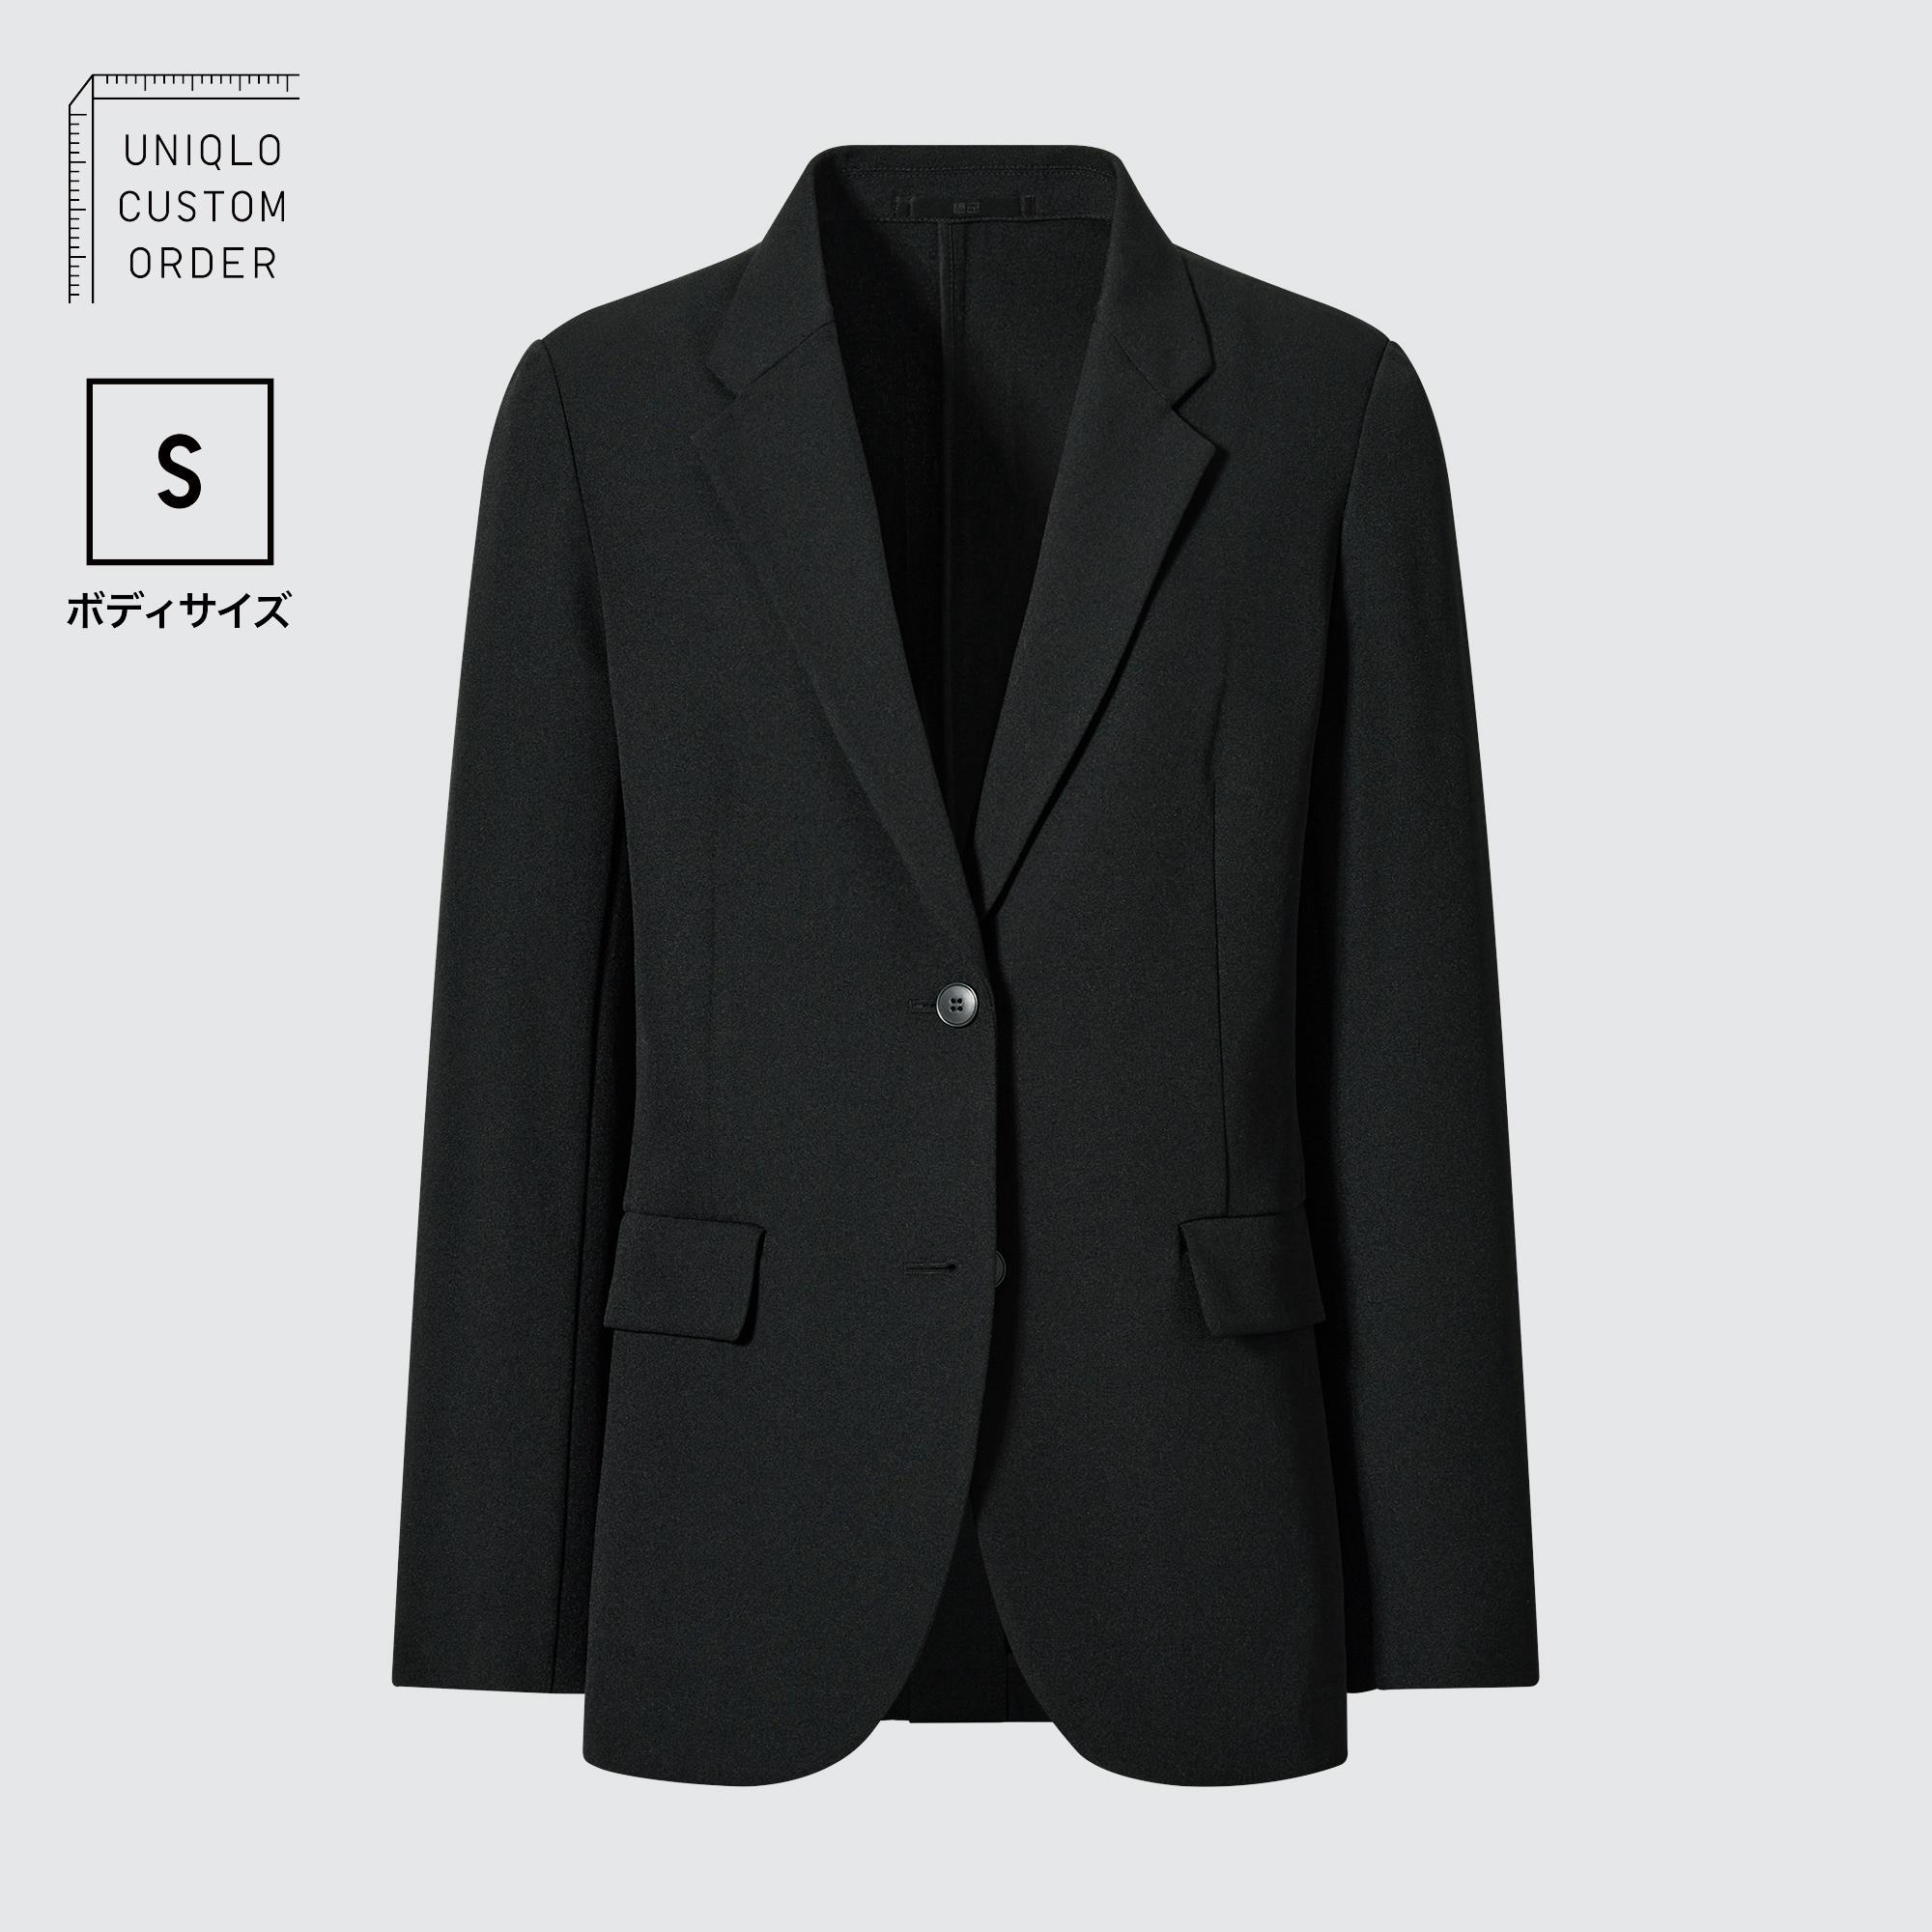 Куртка UNIQLO Кандо S, черный цена и фото